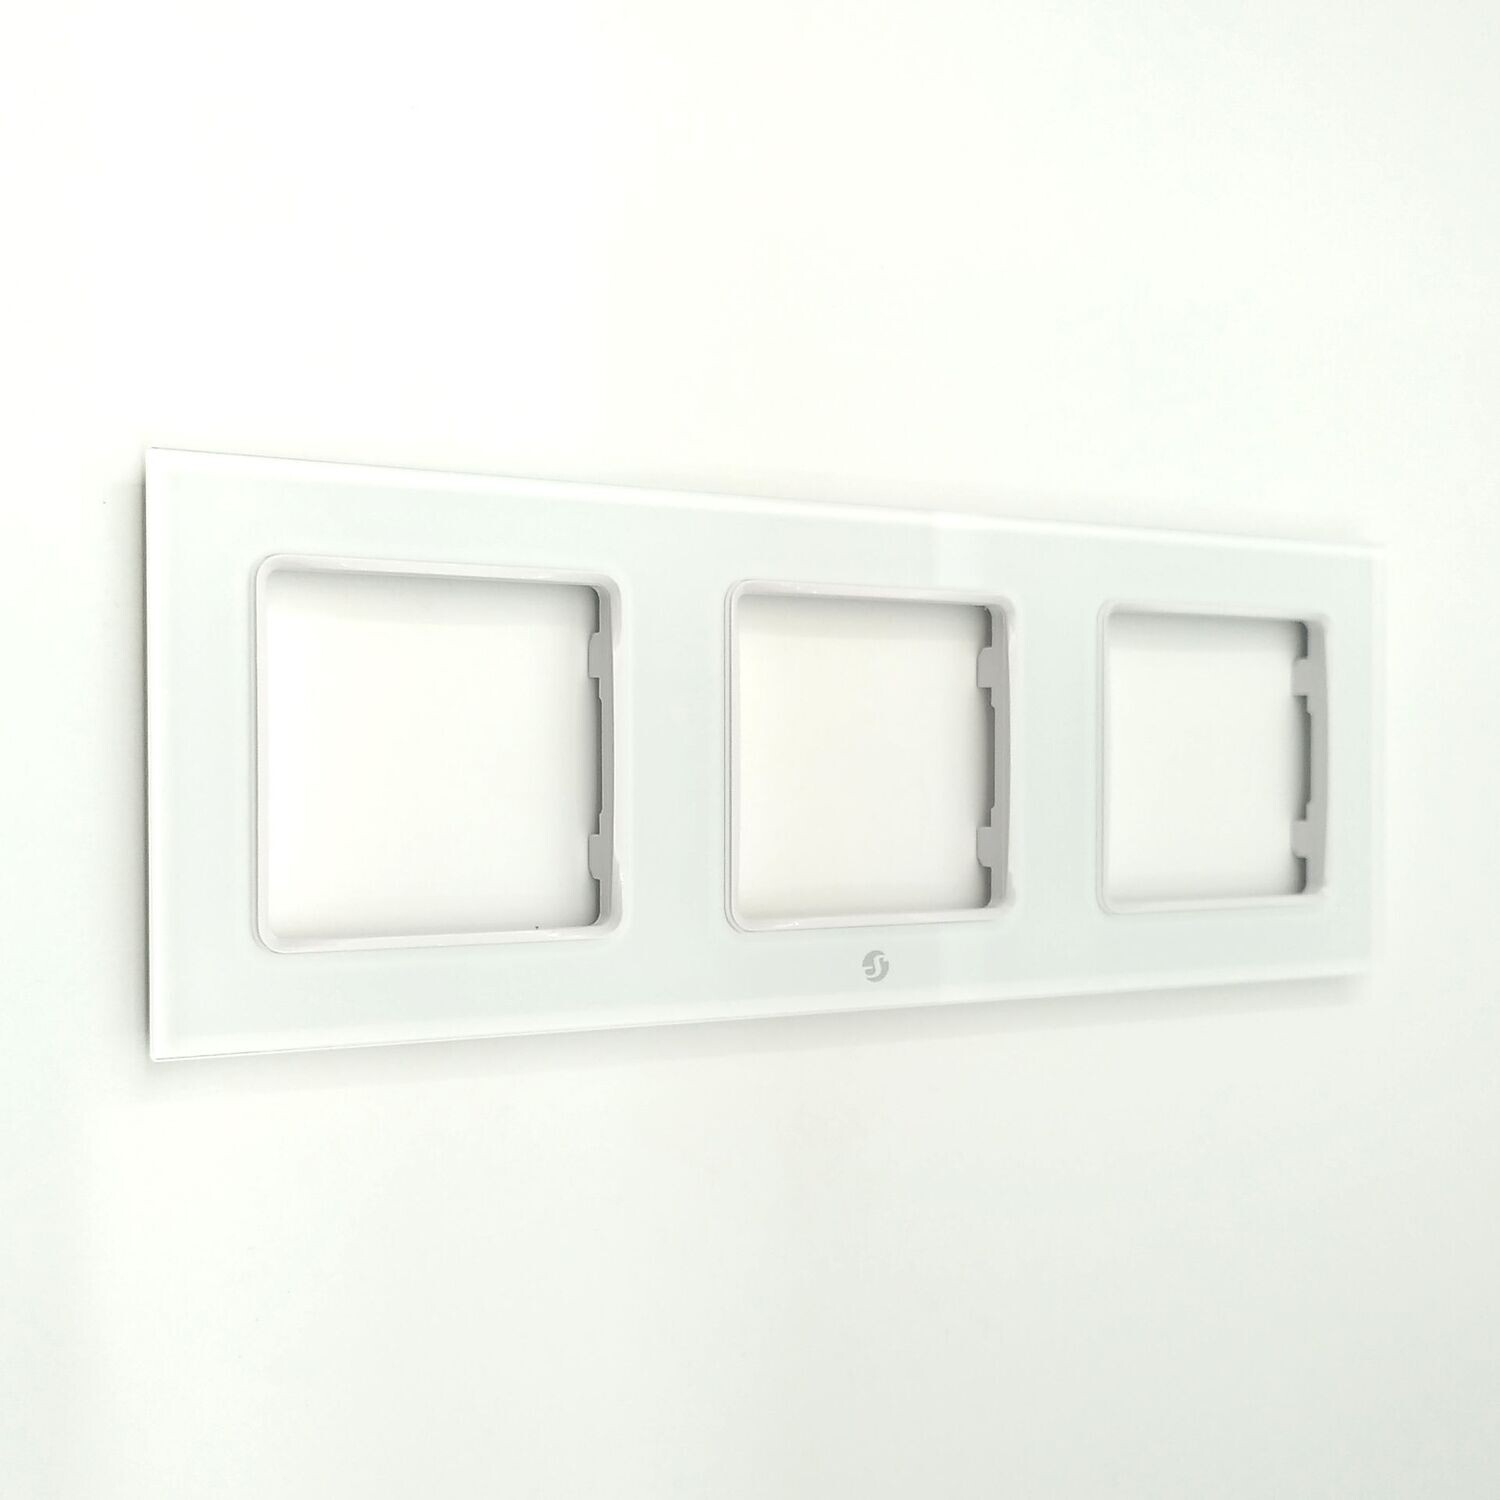 Shelly Wall Frame 3 - kolmen Wall Switch -tuotteen valkoinen seinäkehys